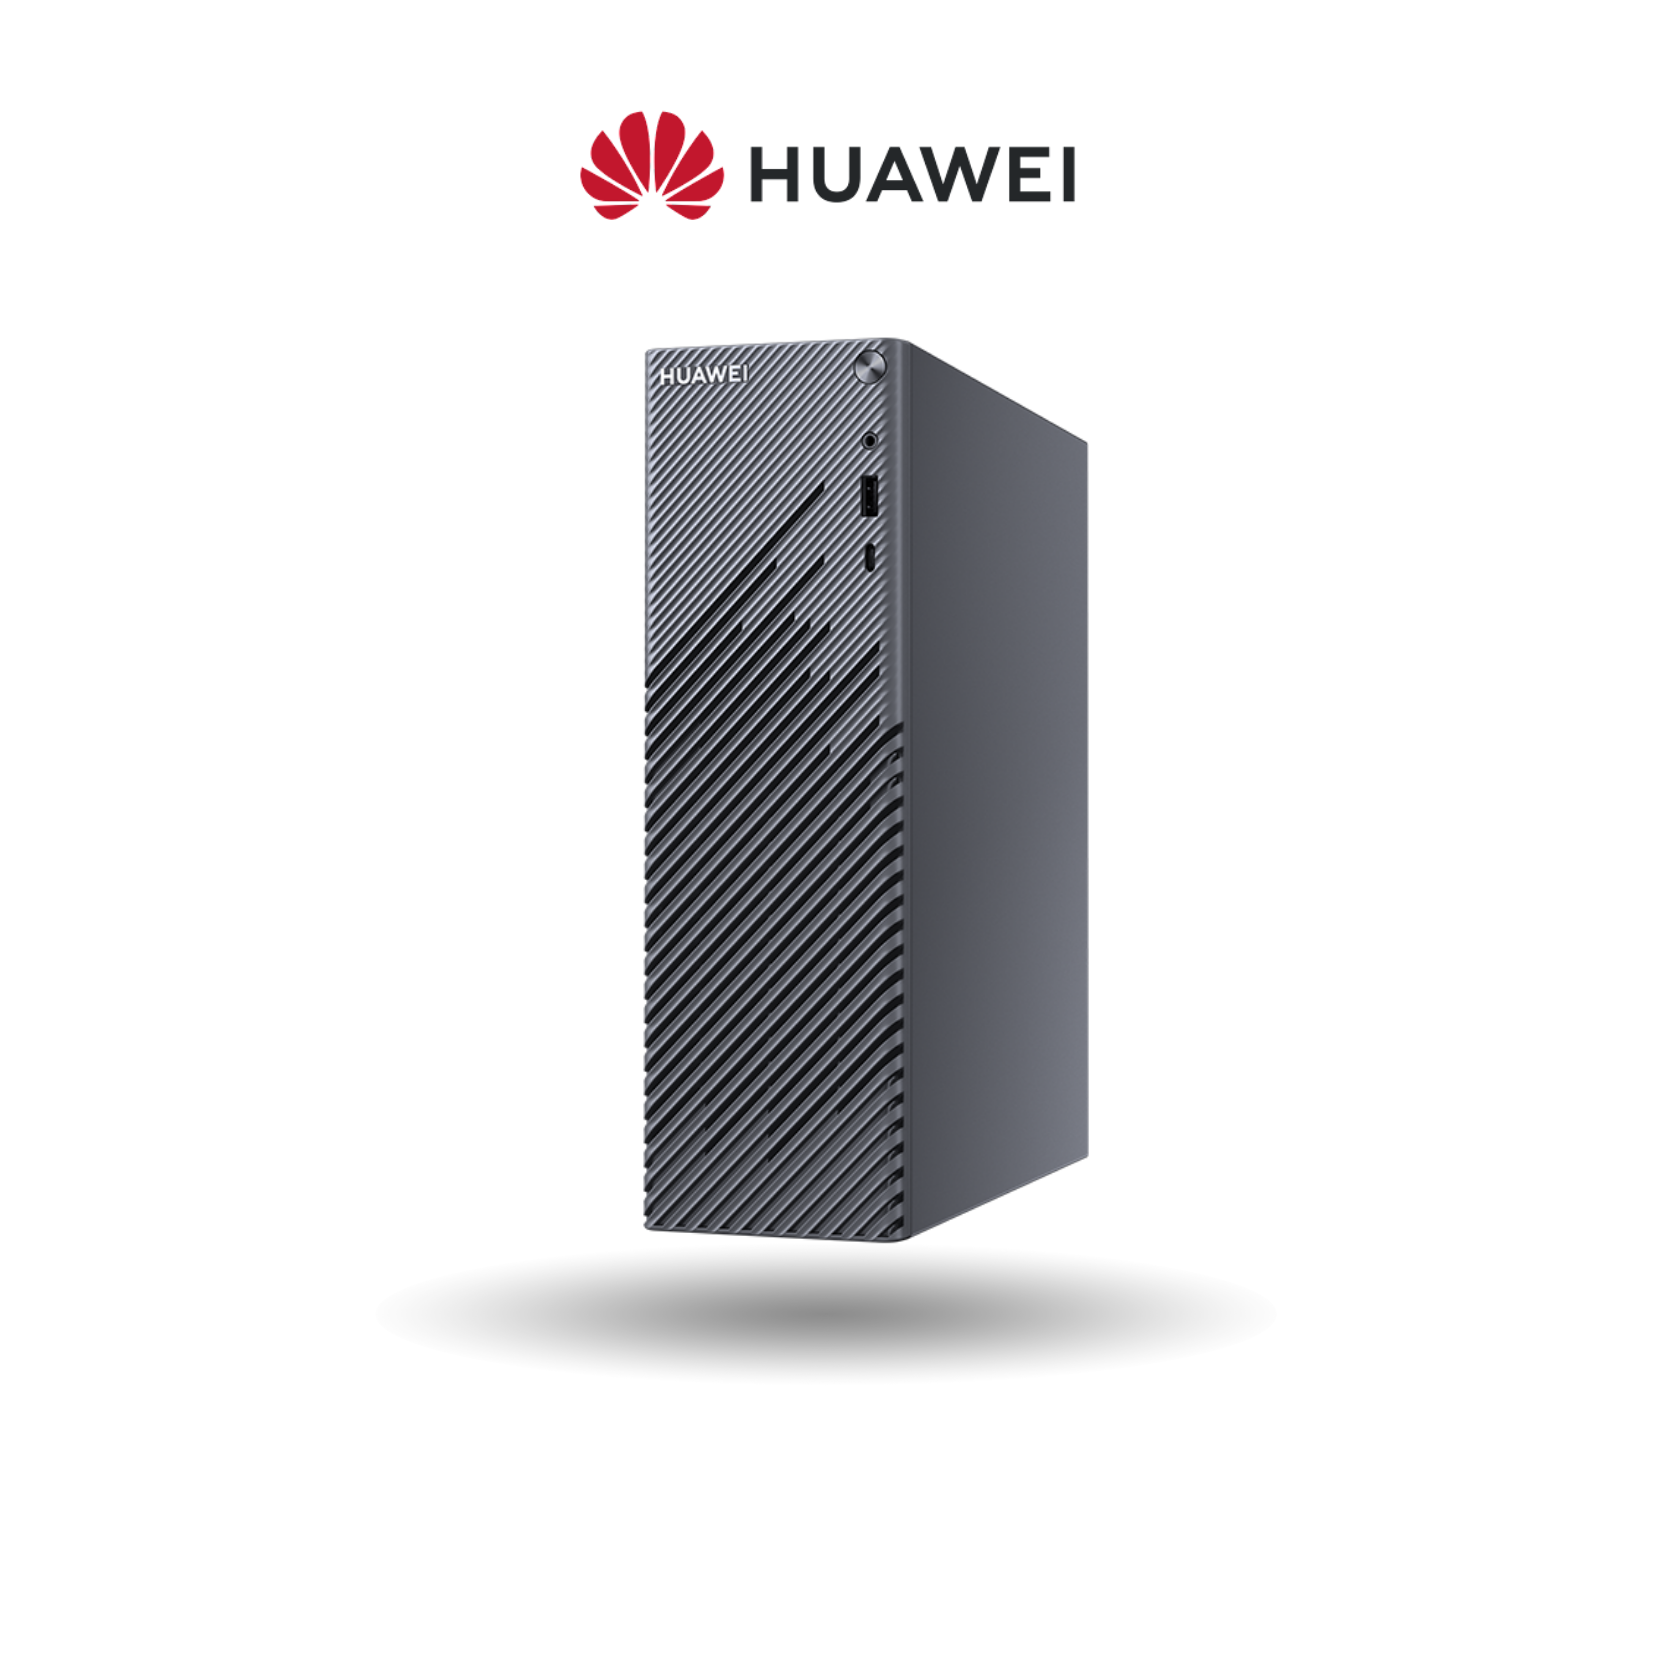 Huawei MateStation S -AMD Ryzen 5 4600G Processor | 8GB RAM / 256GB SSD | Fingerprint Power Button